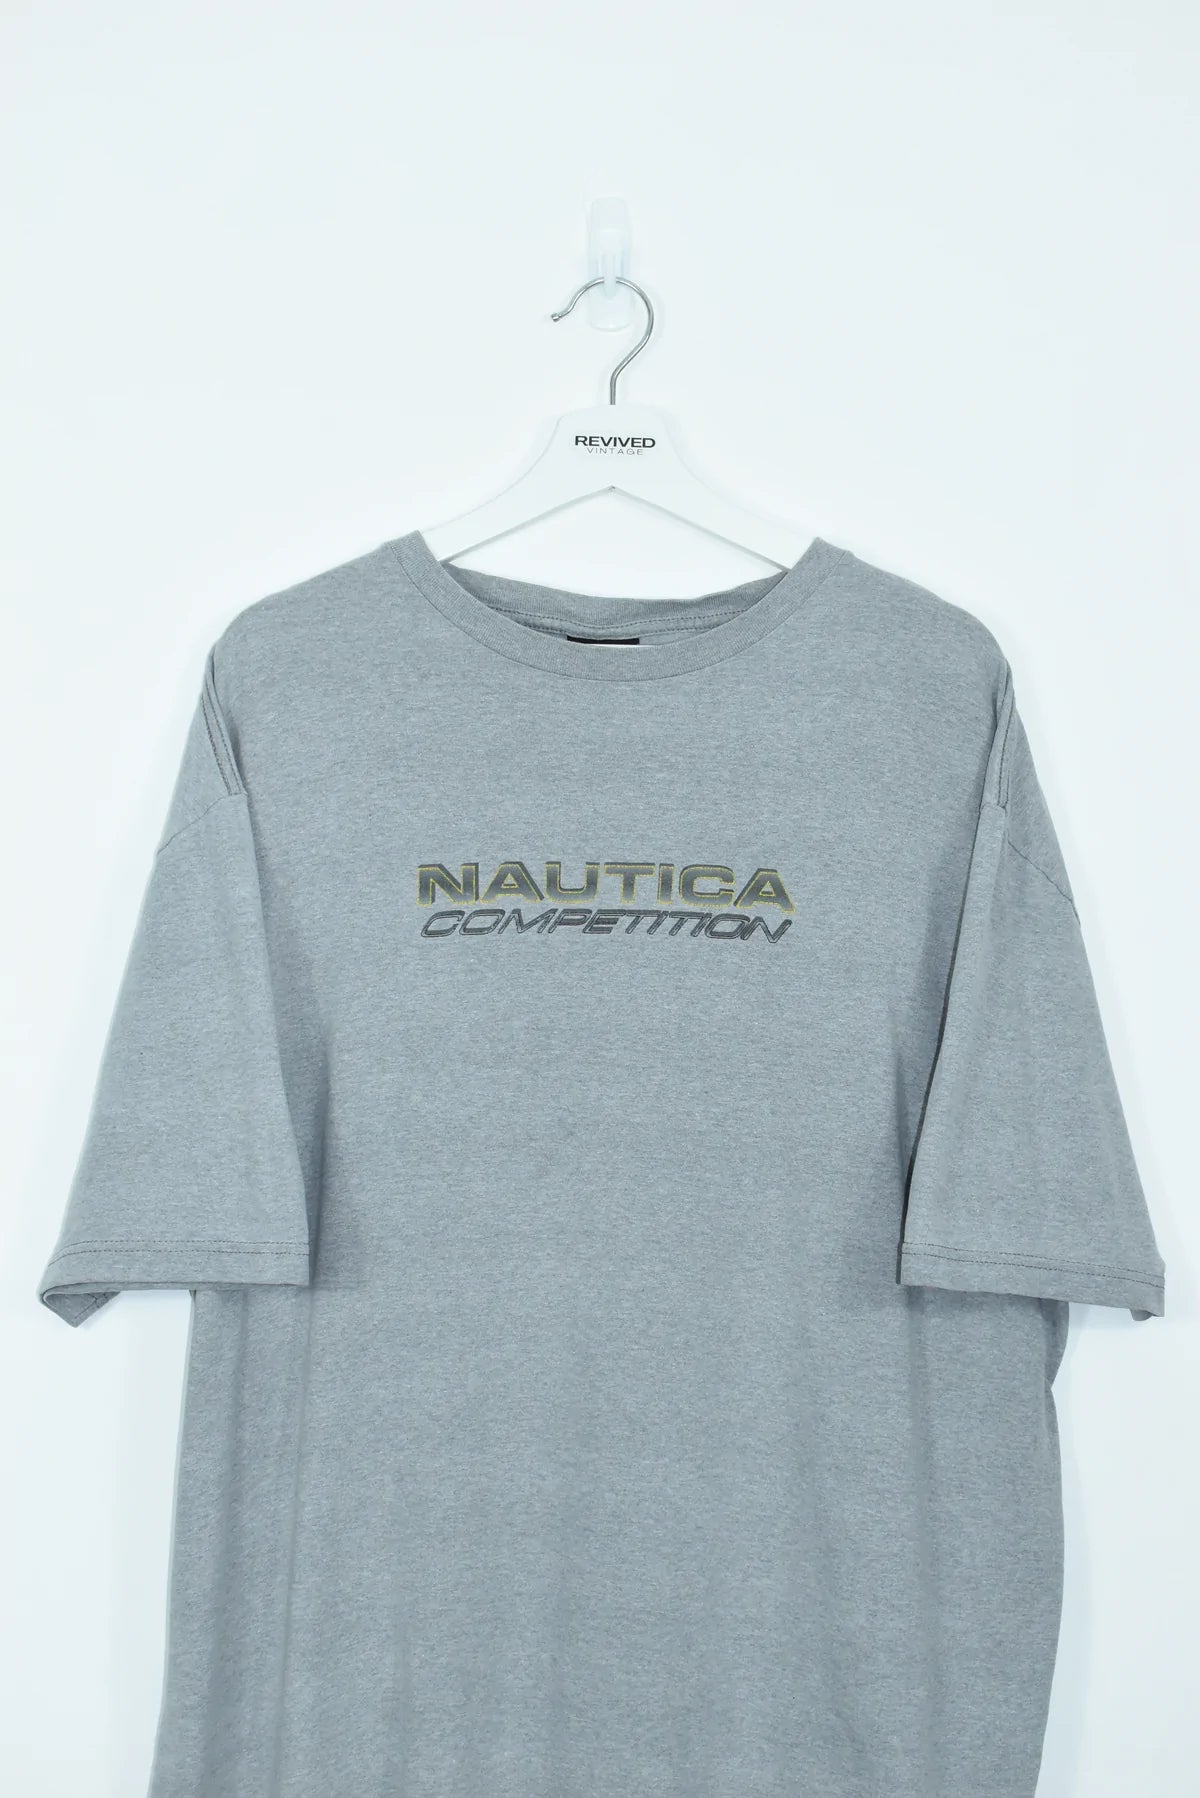 Vintage Nautica Competition Print T Shirt Xlarge